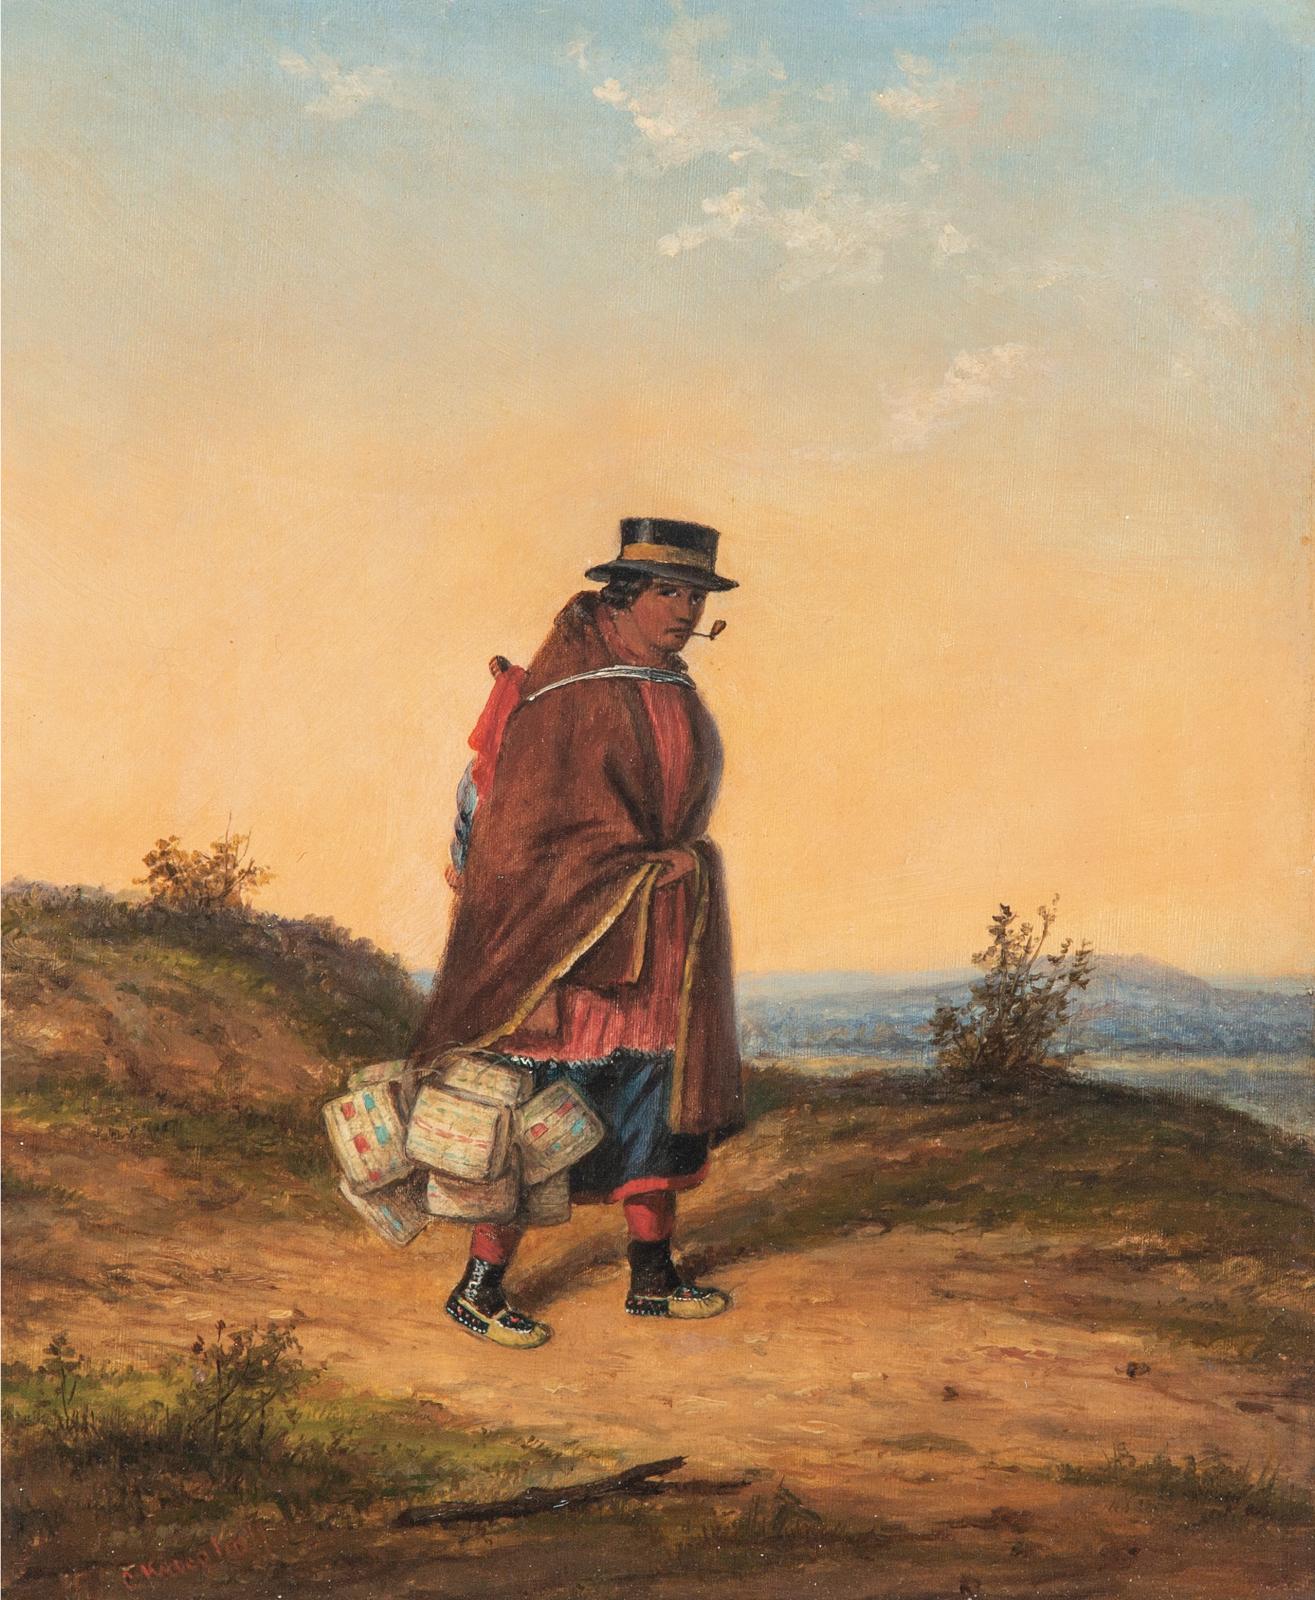 Cornelius David Krieghoff (1815-1872) - Indian Basket Seller